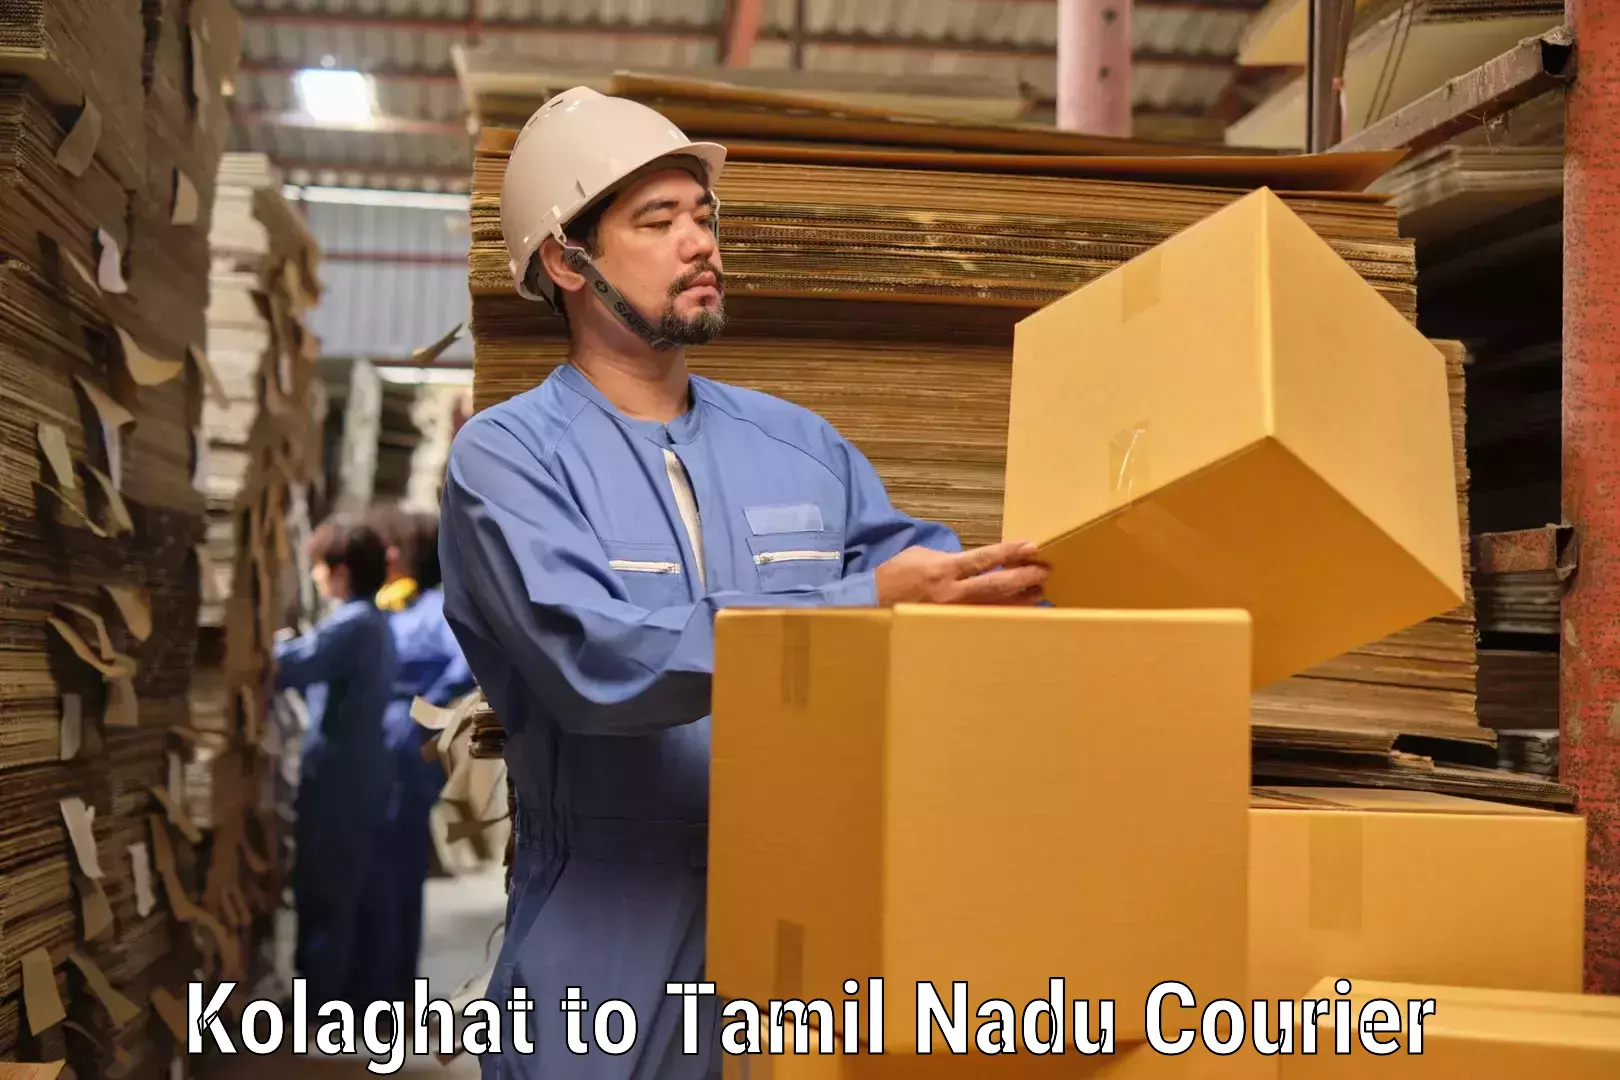 Logistics service provider Kolaghat to Tamil Nadu